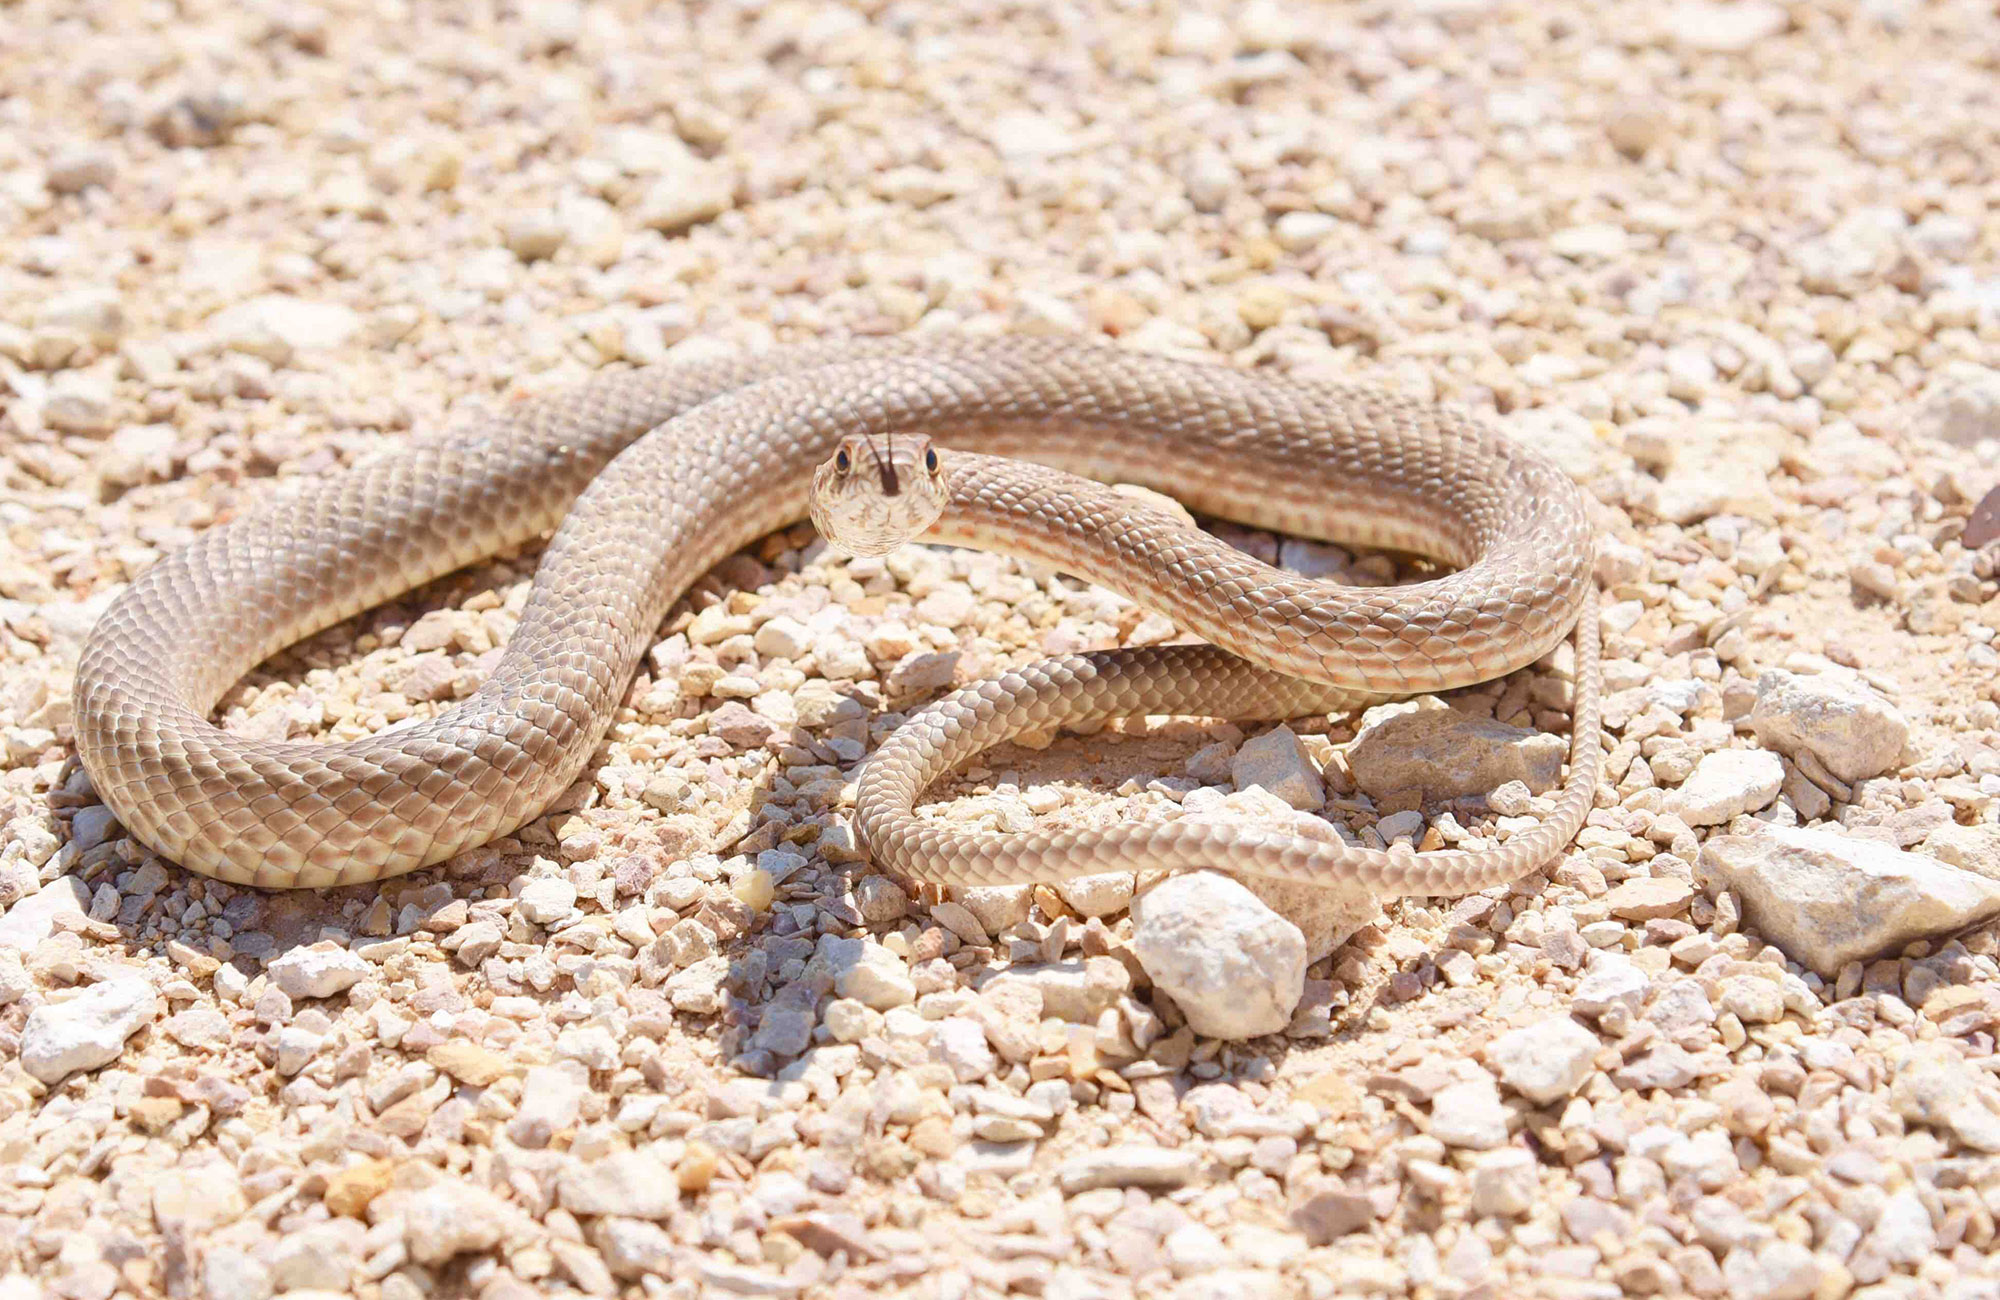 snake in sand